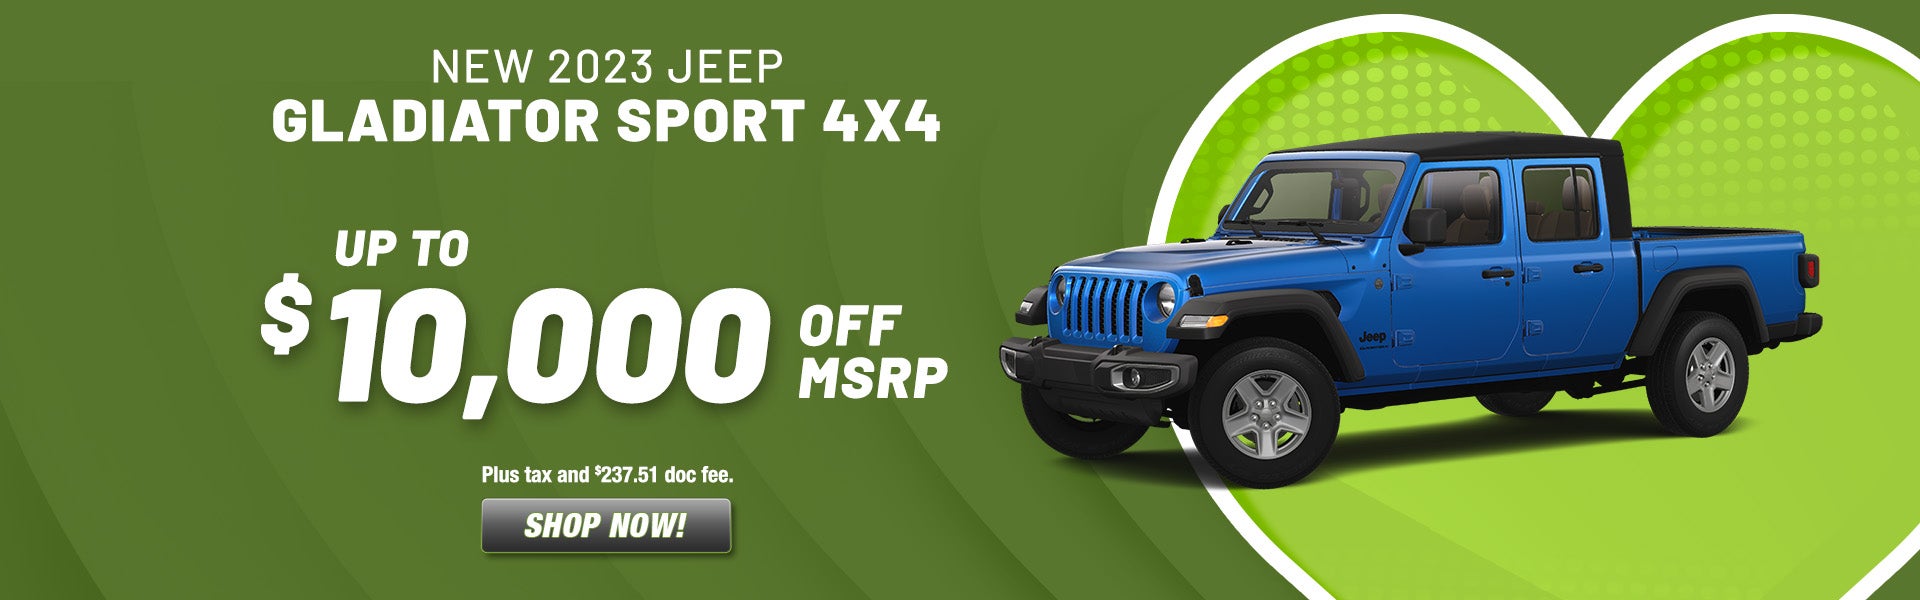 2023 Jeep Gladiator Sport Off MSRP